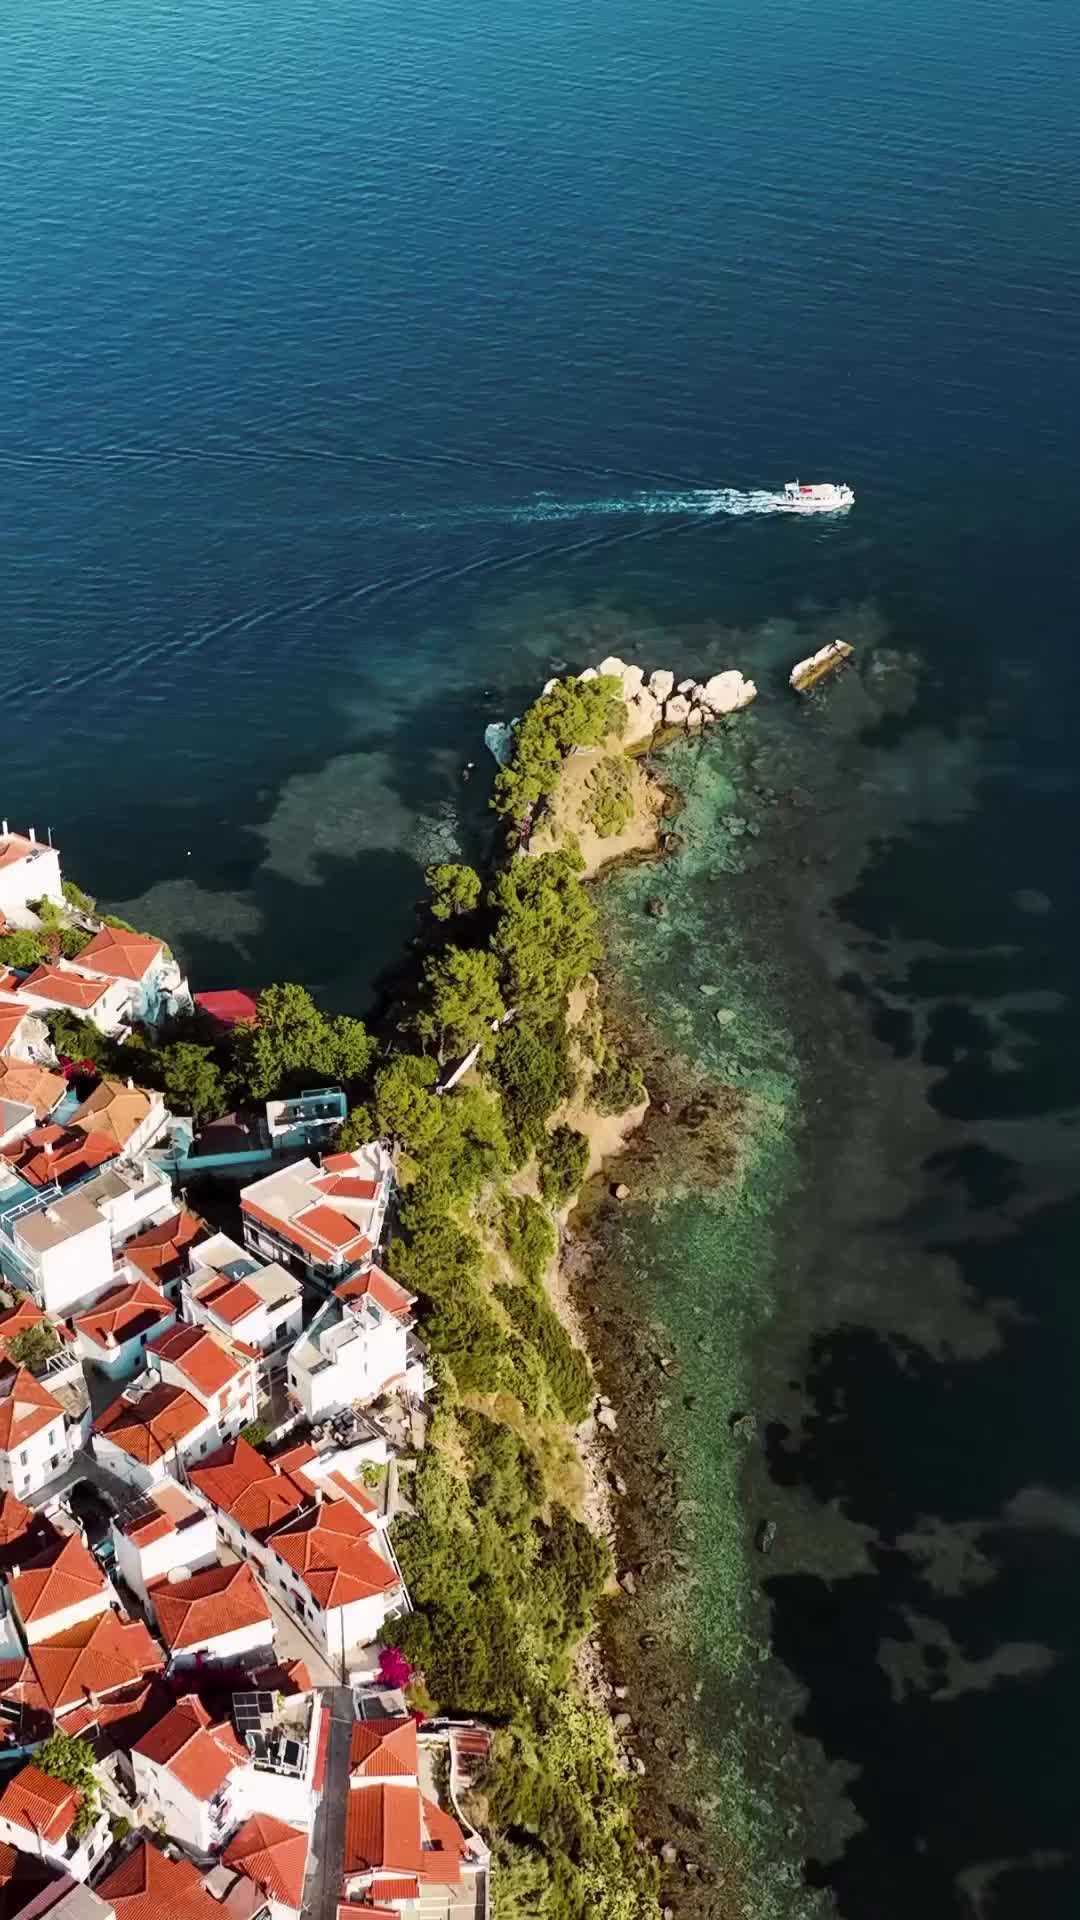 📍Skiathos island 
.
.
.
.
.
.
.
.
.
.
.
.
.
.
.
.
.
.
.
.
.
.
.
#greece #skiathos #beautifuldestinations #travellingthroughtheworld #skiathosisland #sporades #dji #sporadesislands #hello_rooftops #travelgreece #visitgreece #discovergreece #drone #vacation #greekvacation #greeceislands #greek #summer #greece_travel #perfect_greece